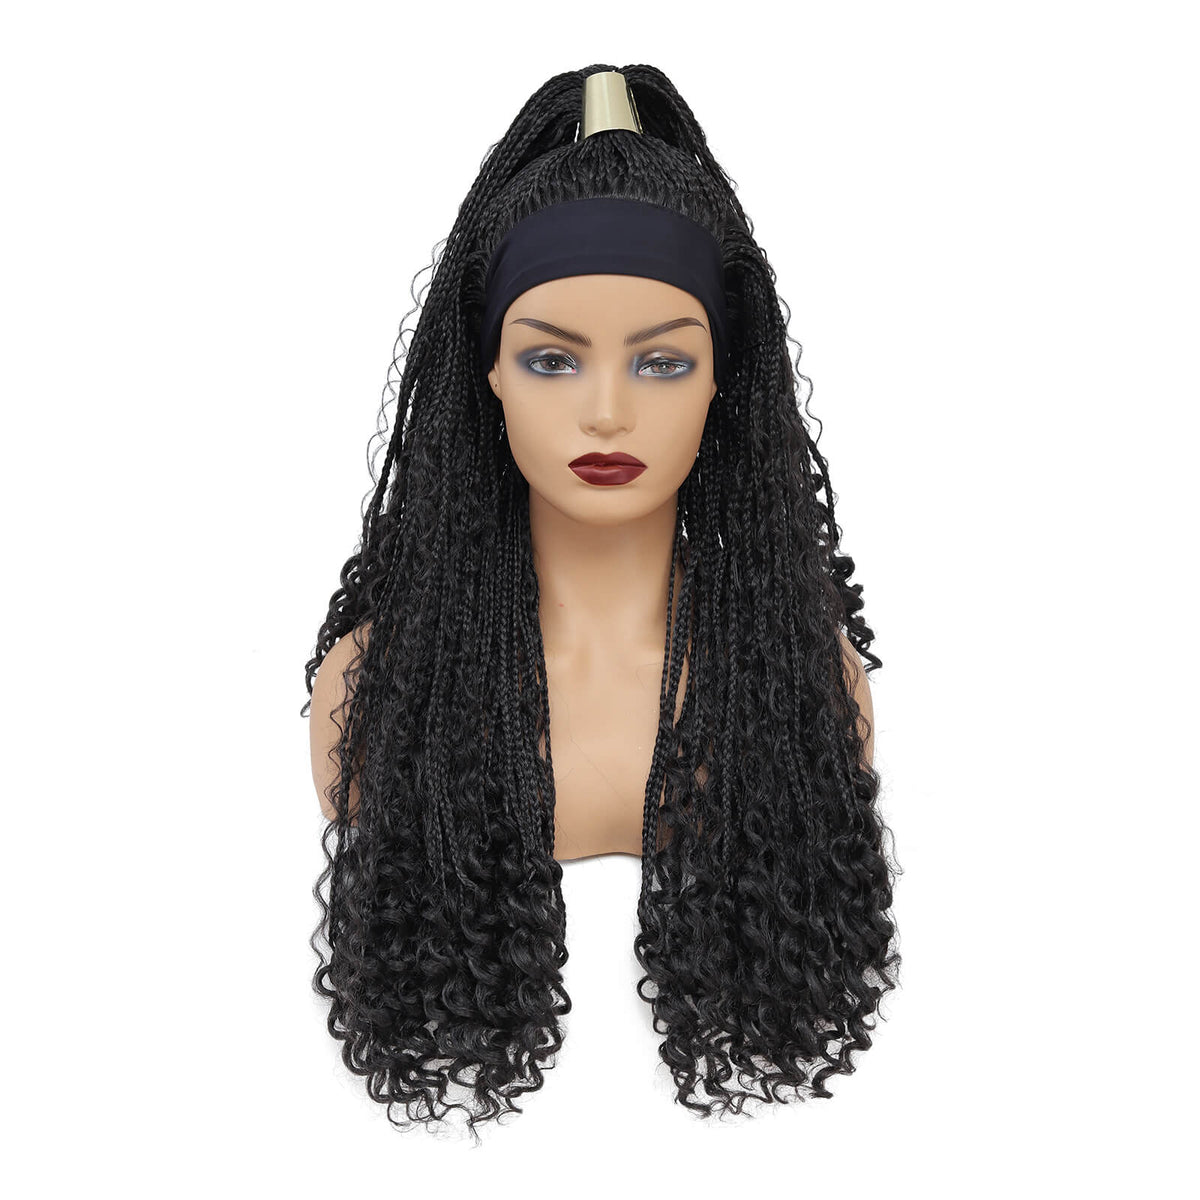 Headband Wigs Box Braided Wigs with Free Tress Black Color – ROSEBONY